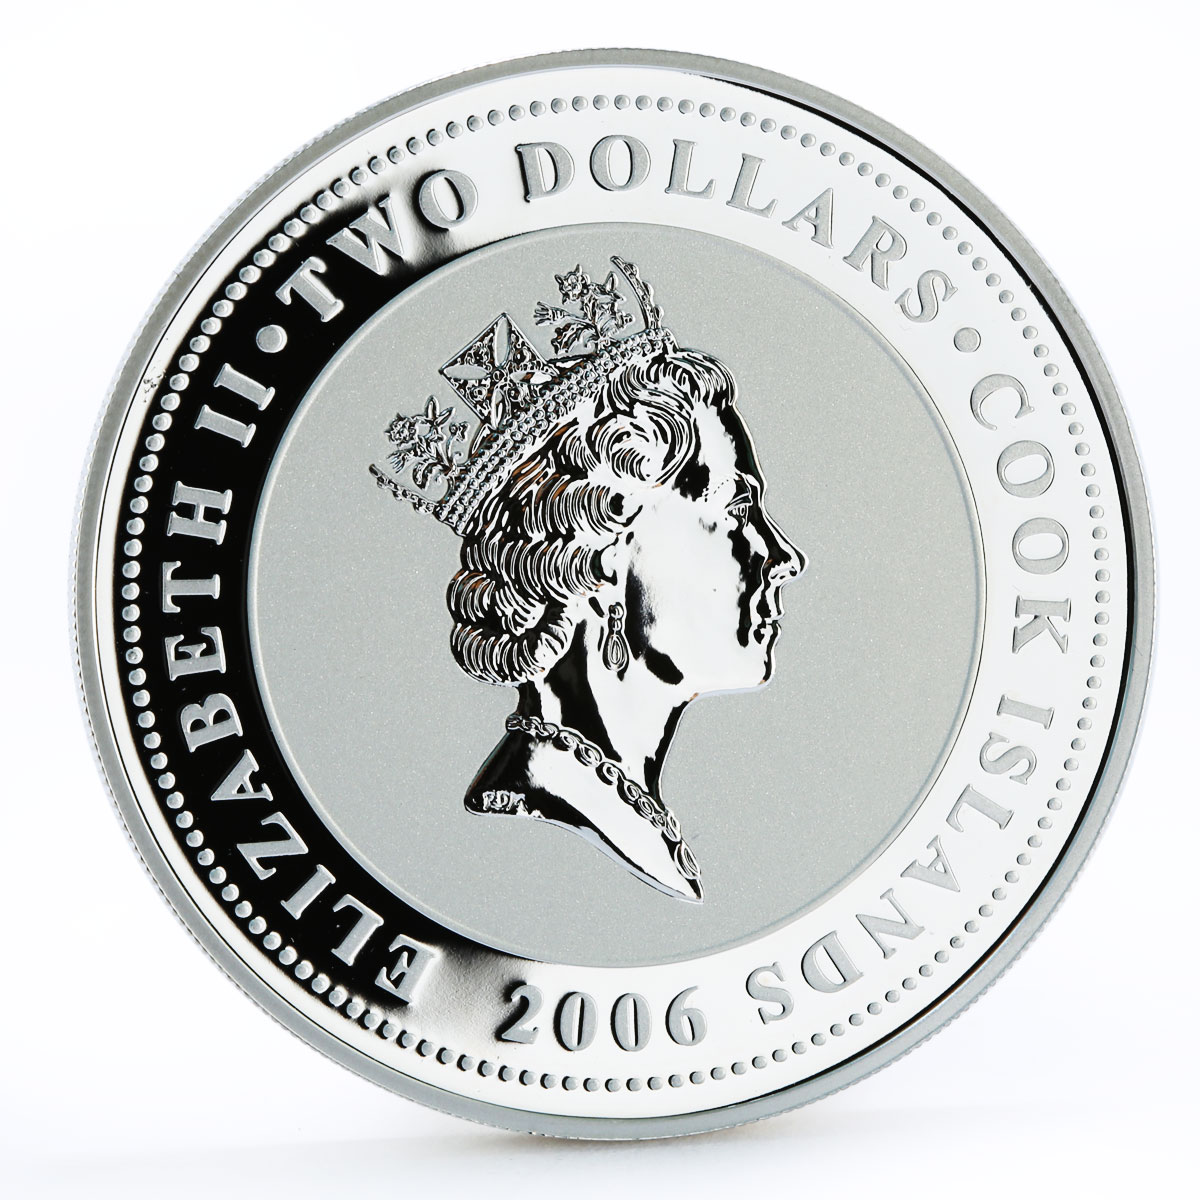 Cook Islands 2 dollars Poet Marina Tsvetaeva colored silver coin 2006